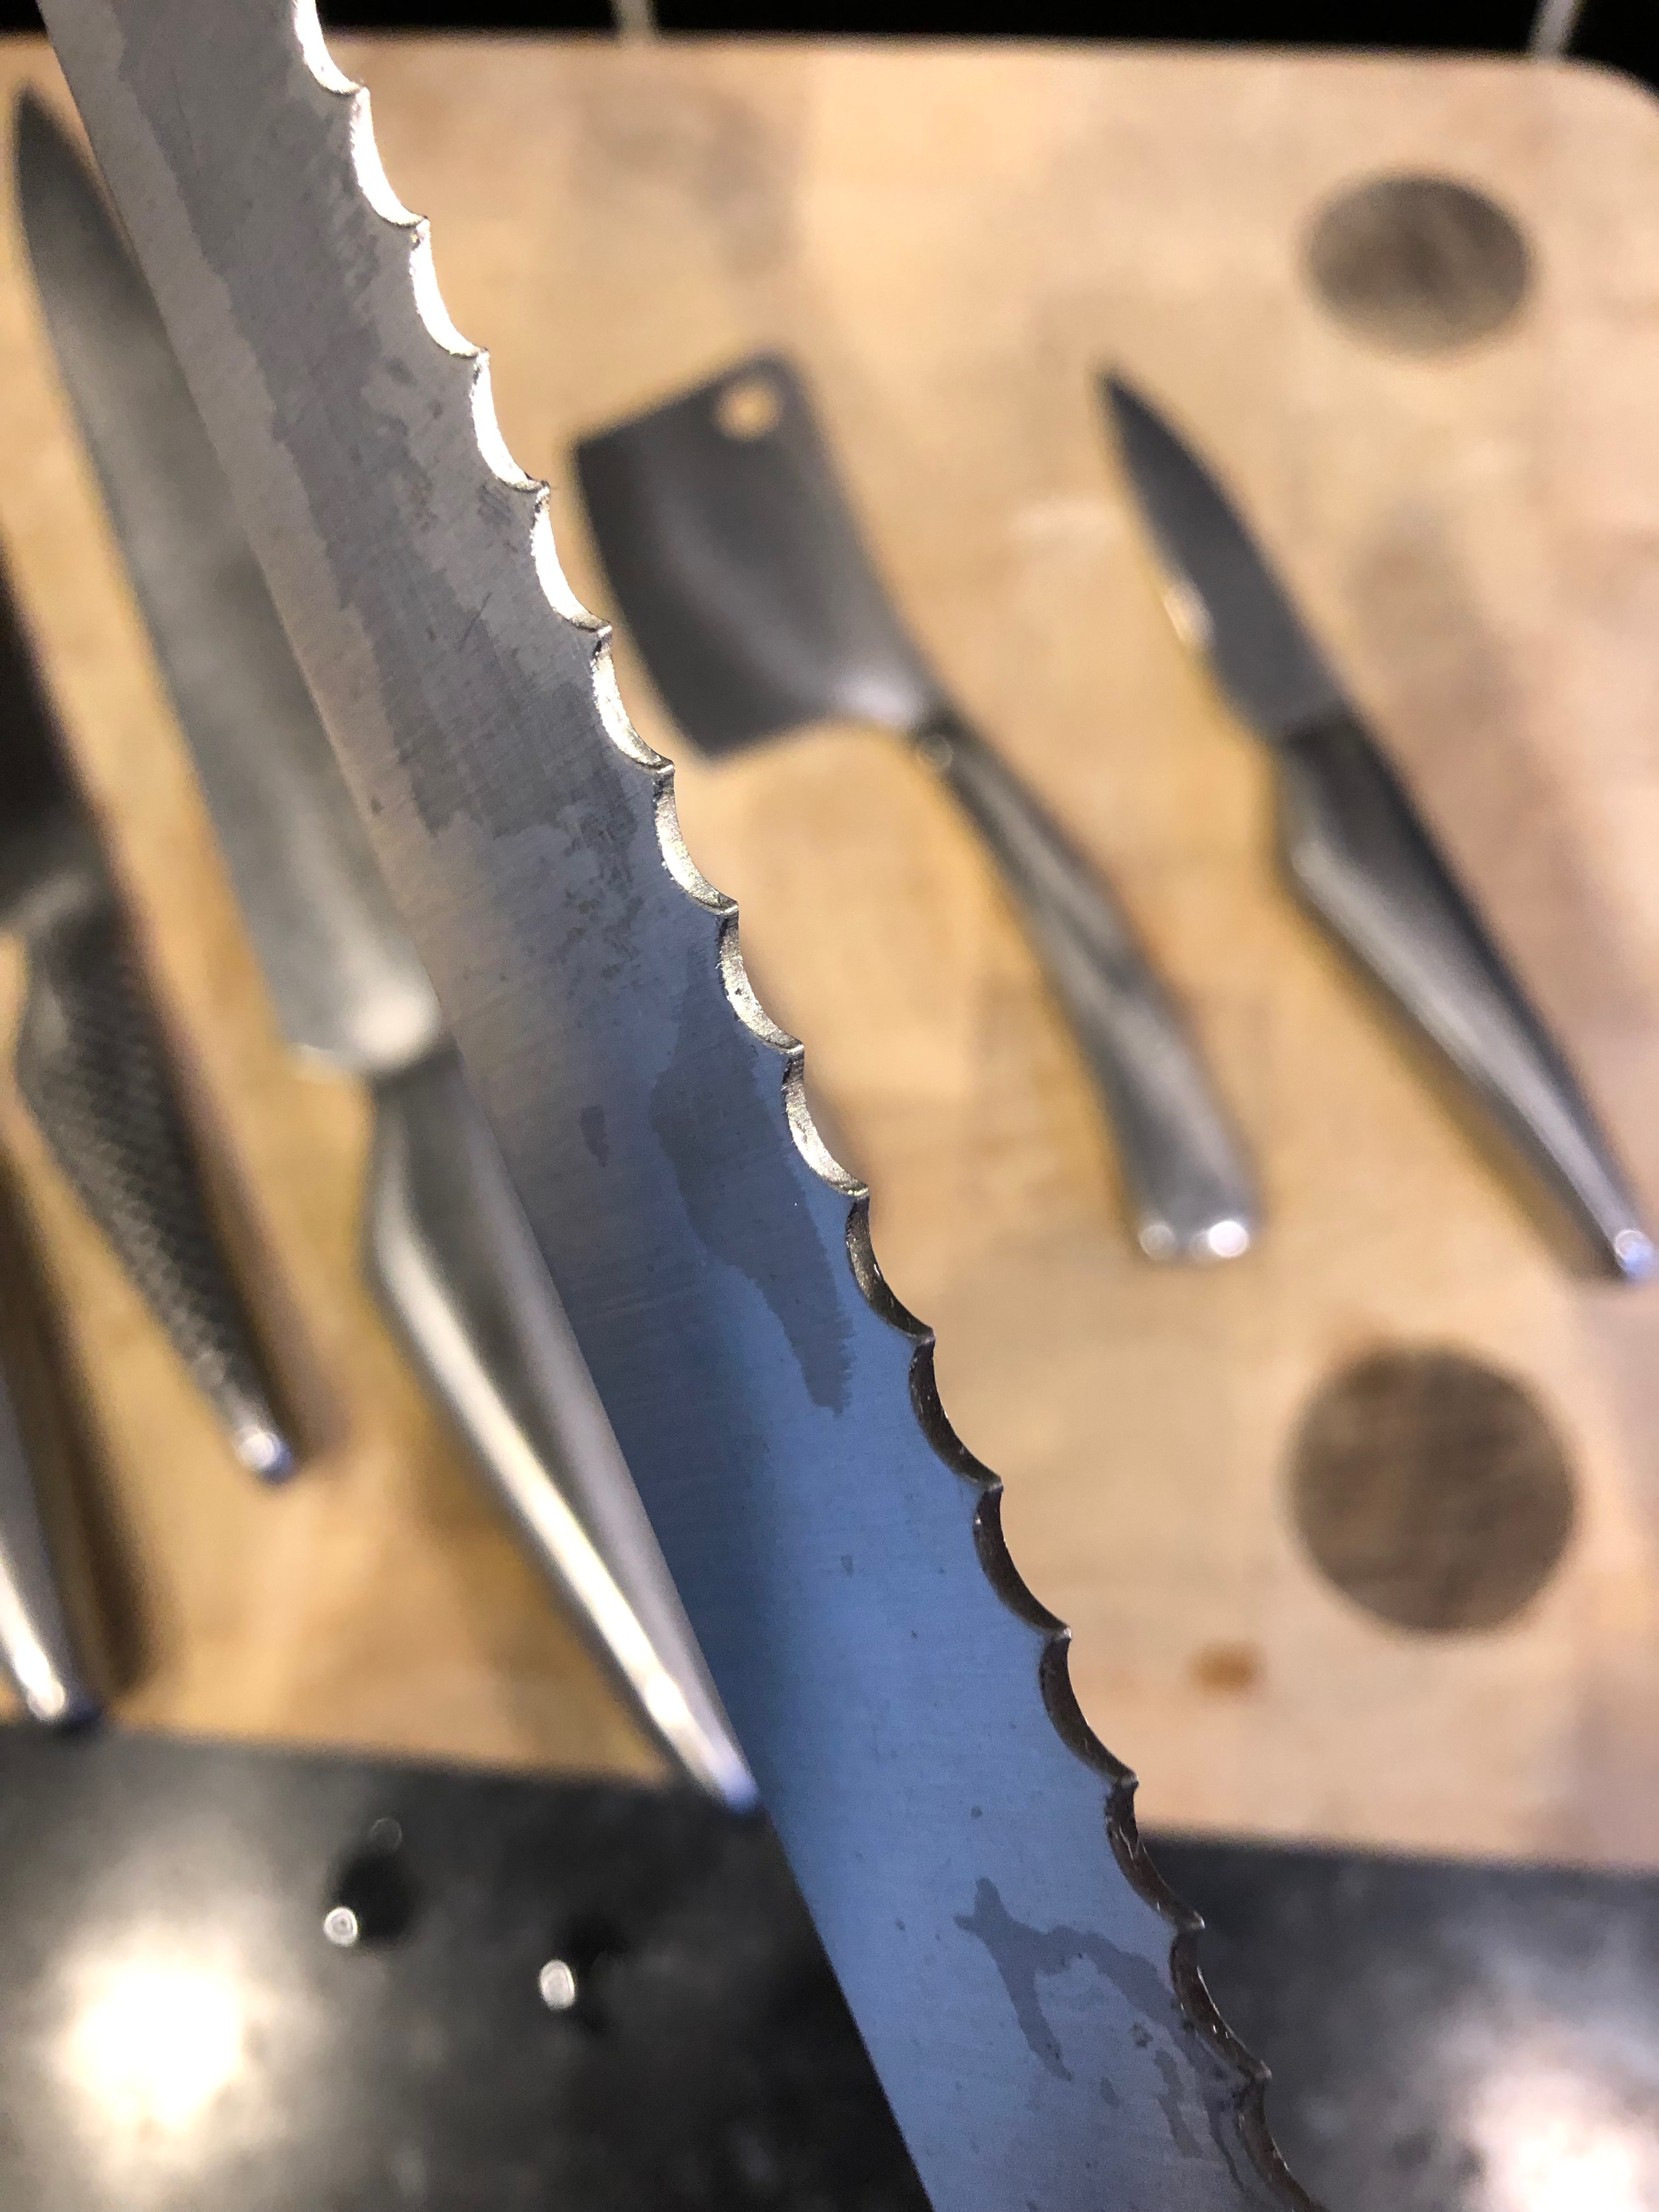 AnySharp Pro Knife Sharpener Review